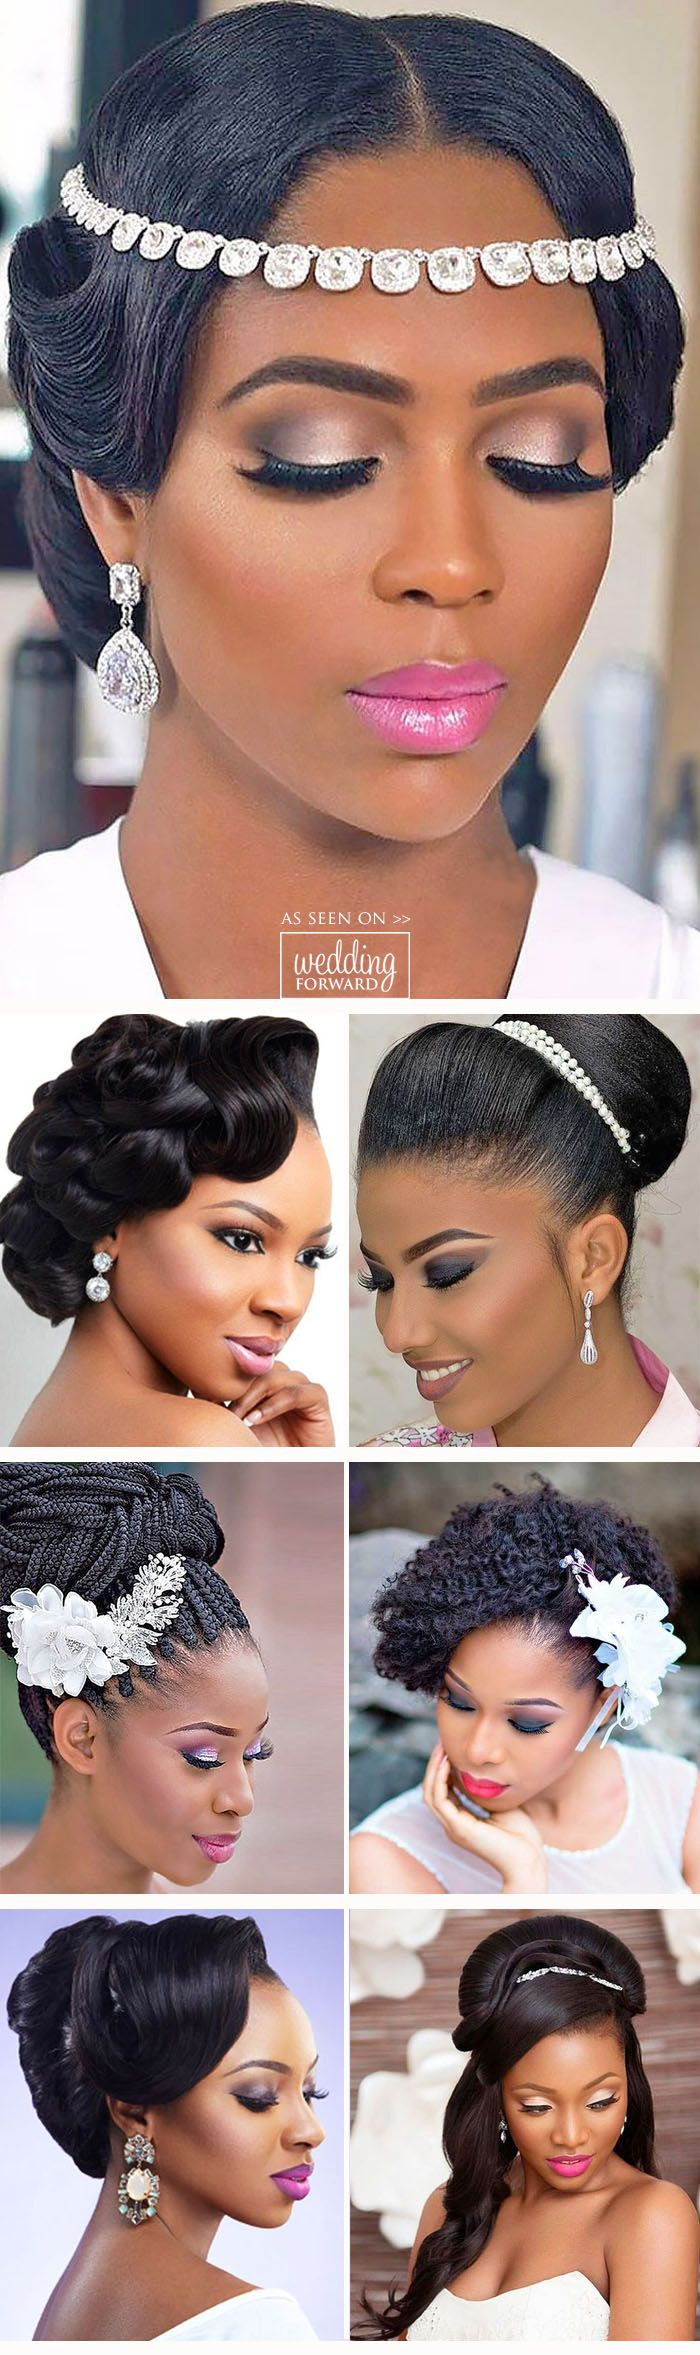 Short Wedding Hairstyles For Black Brides
 30 Black Women Wedding Hairstyles